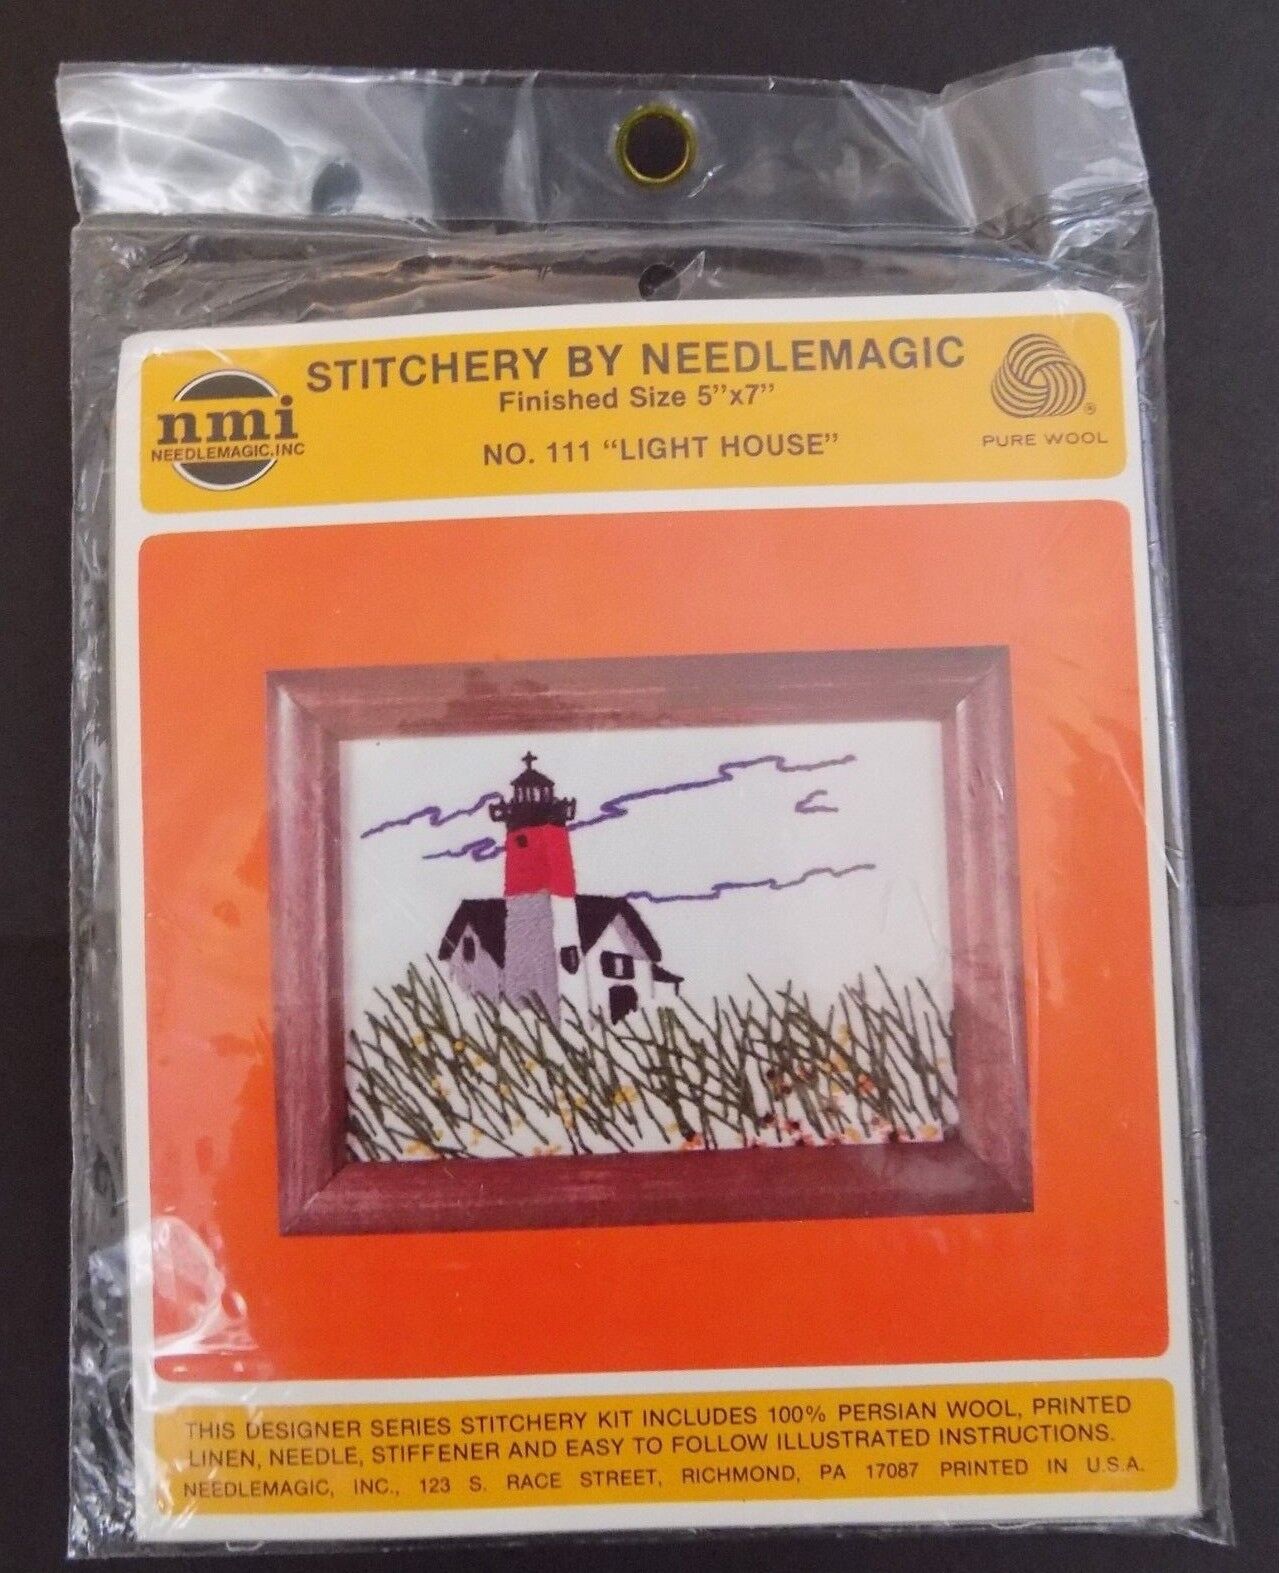 Lot Of 2 - nmi NeedleMagic Crewel/Stitchery Kits - Cattails & Light House - NEW nmi NeedleMagic # 920 & No. 111 - фотография #4